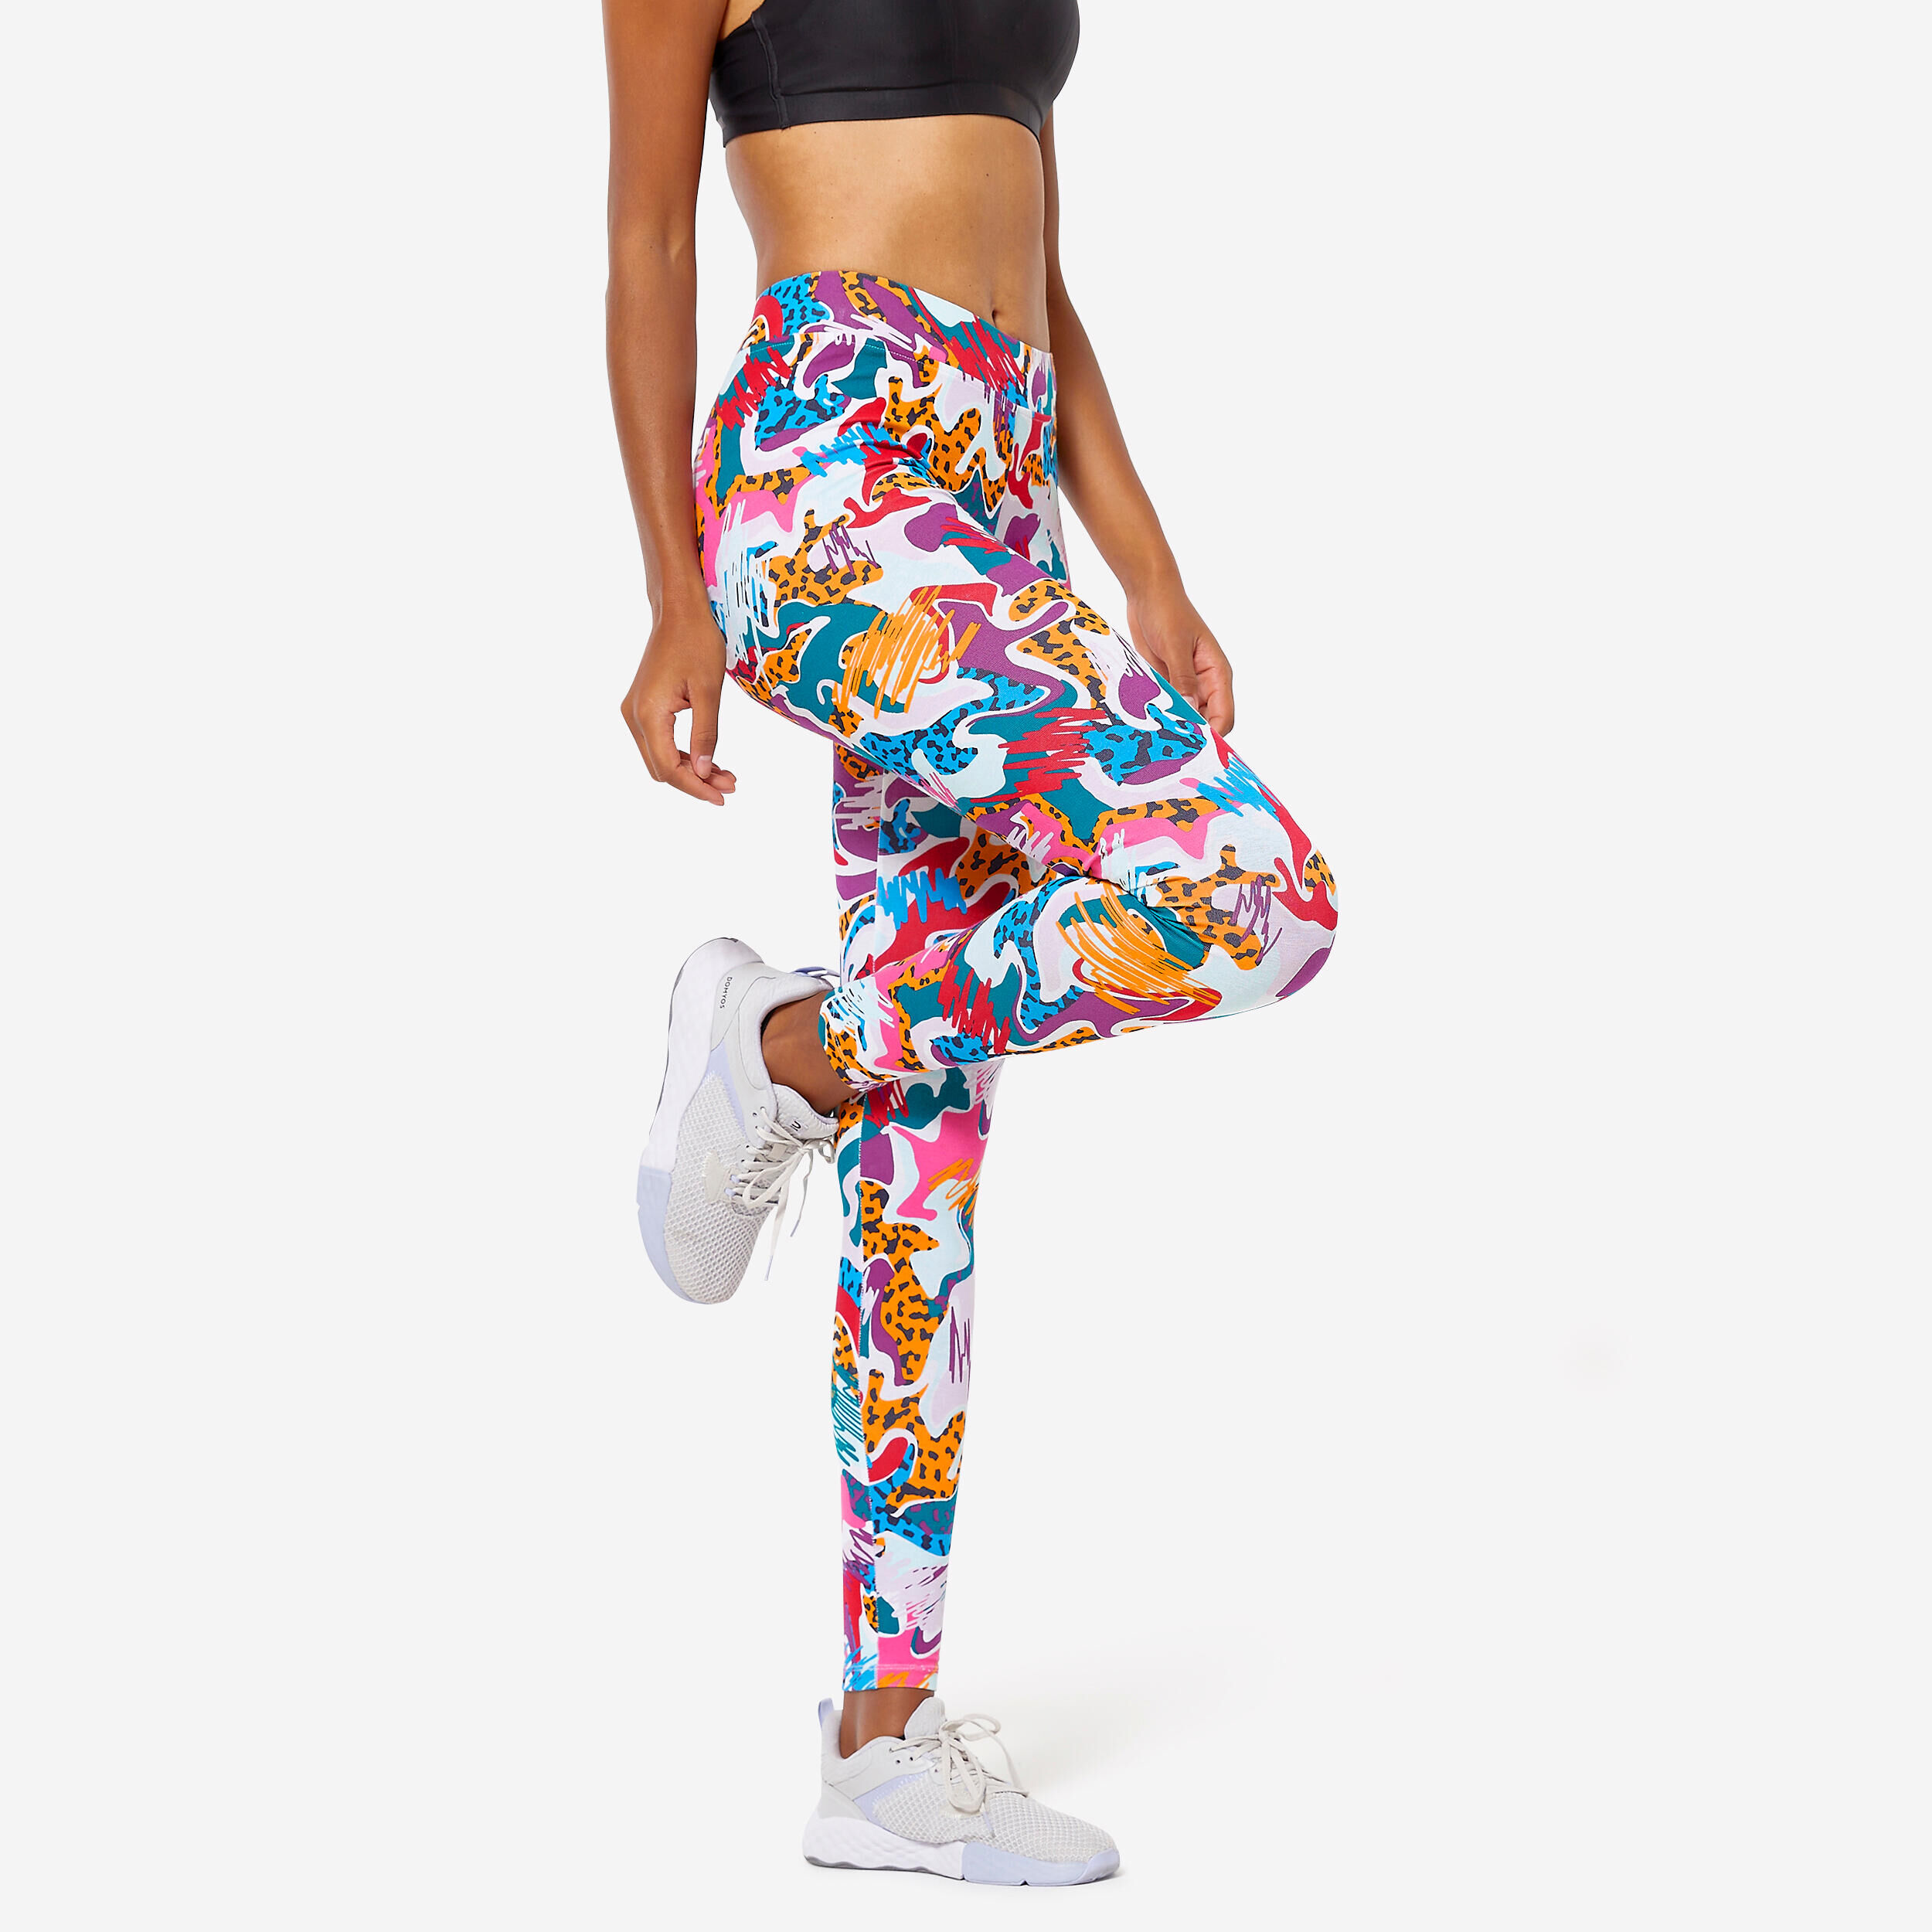 DOMYOS Women's Slim Fitness Leggings Fit+ 500 - Multicolour Print